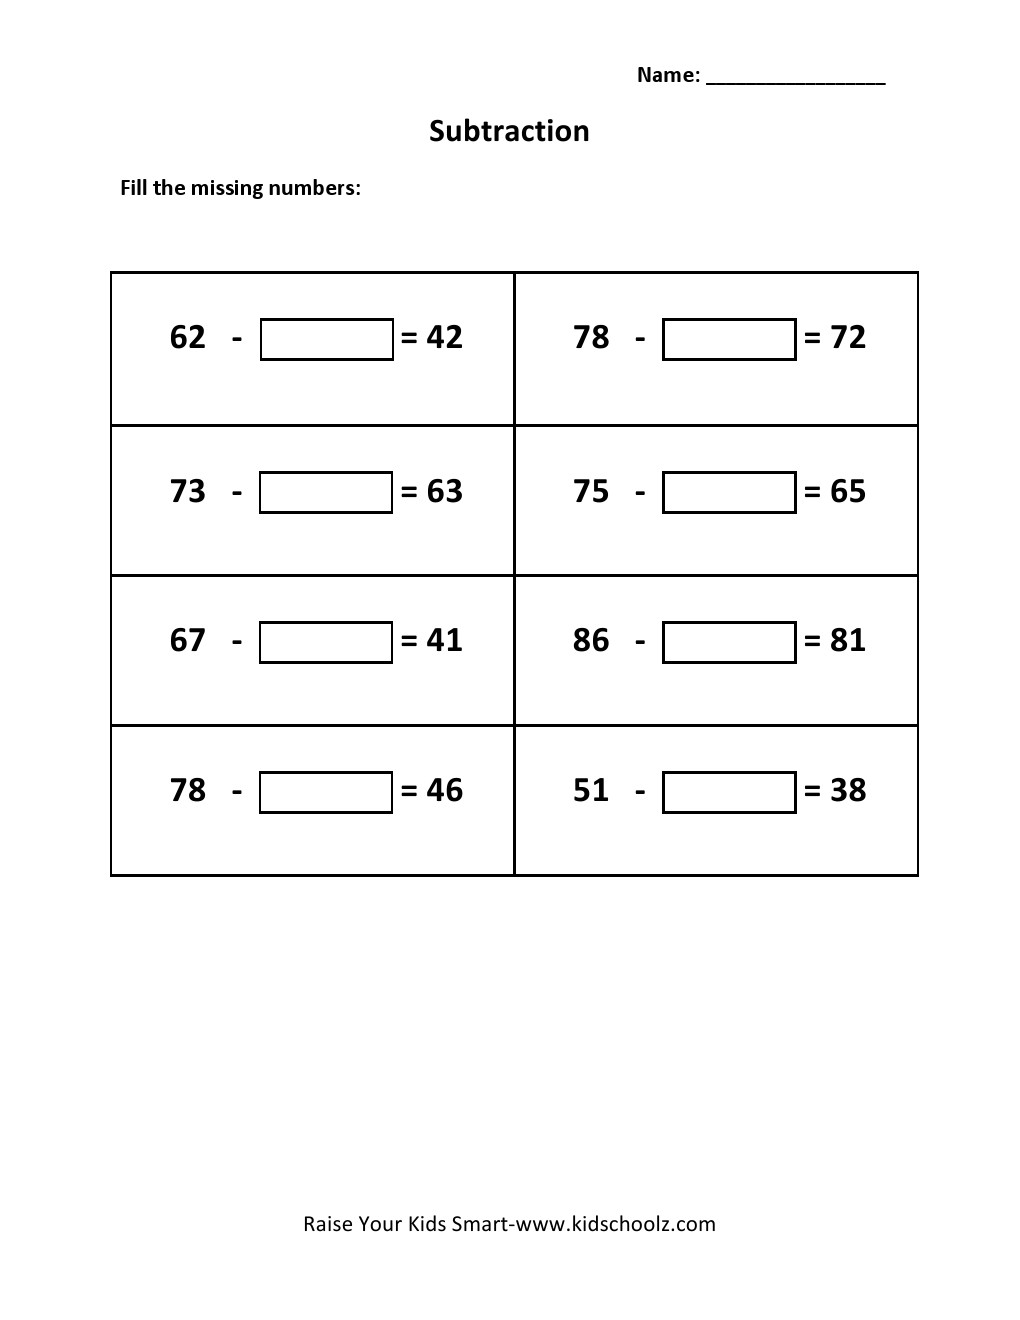 Grade 2 - Missing Subtraction Numbers Worksheet 3  alphabet worksheets, education, learning, and math worksheets Worksheets For Lkg 2 1320 x 1020